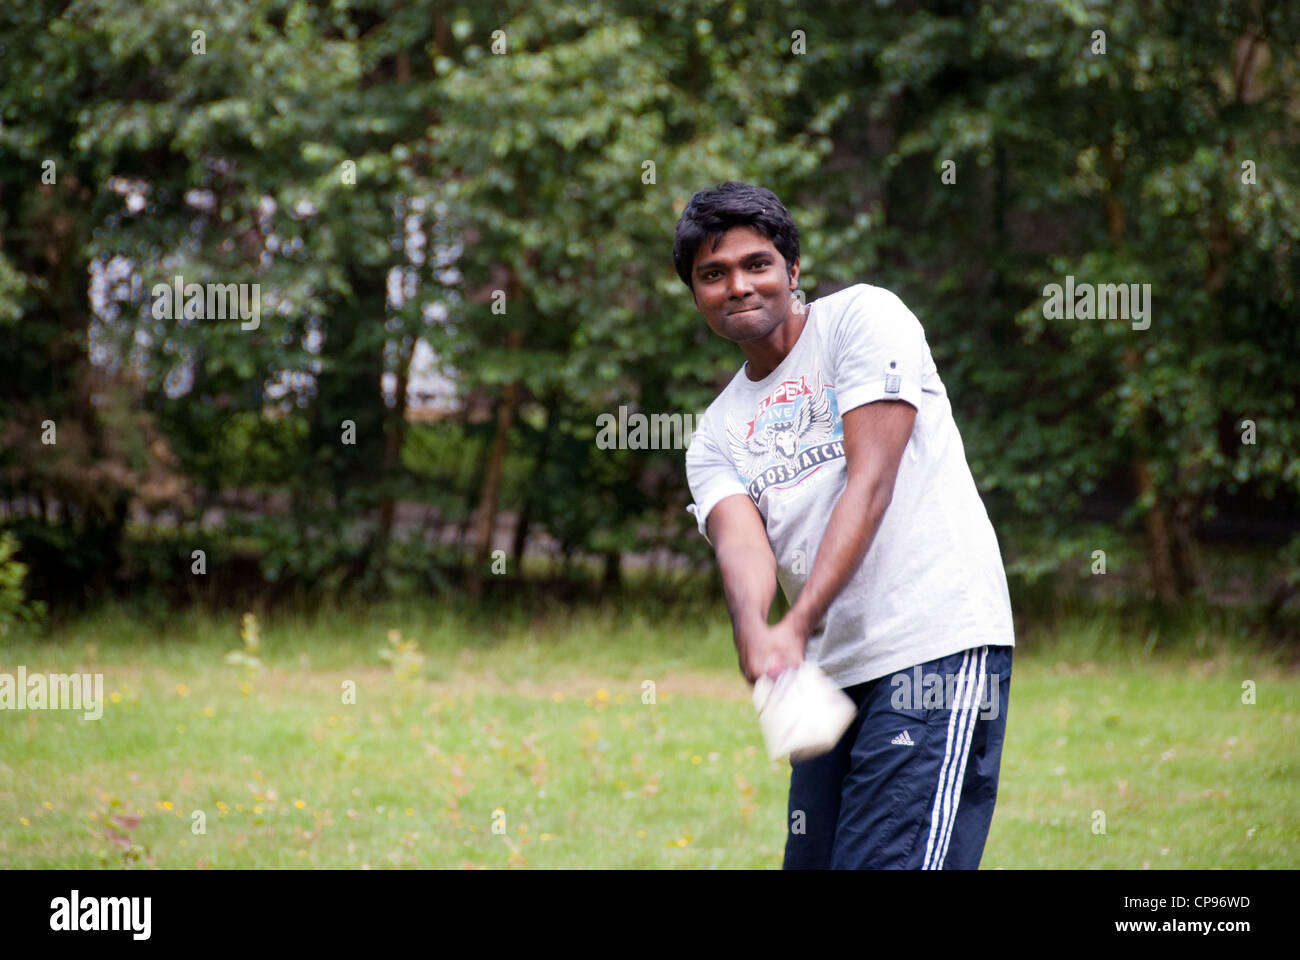 Indian cricketer smiling at camera Stock Photo